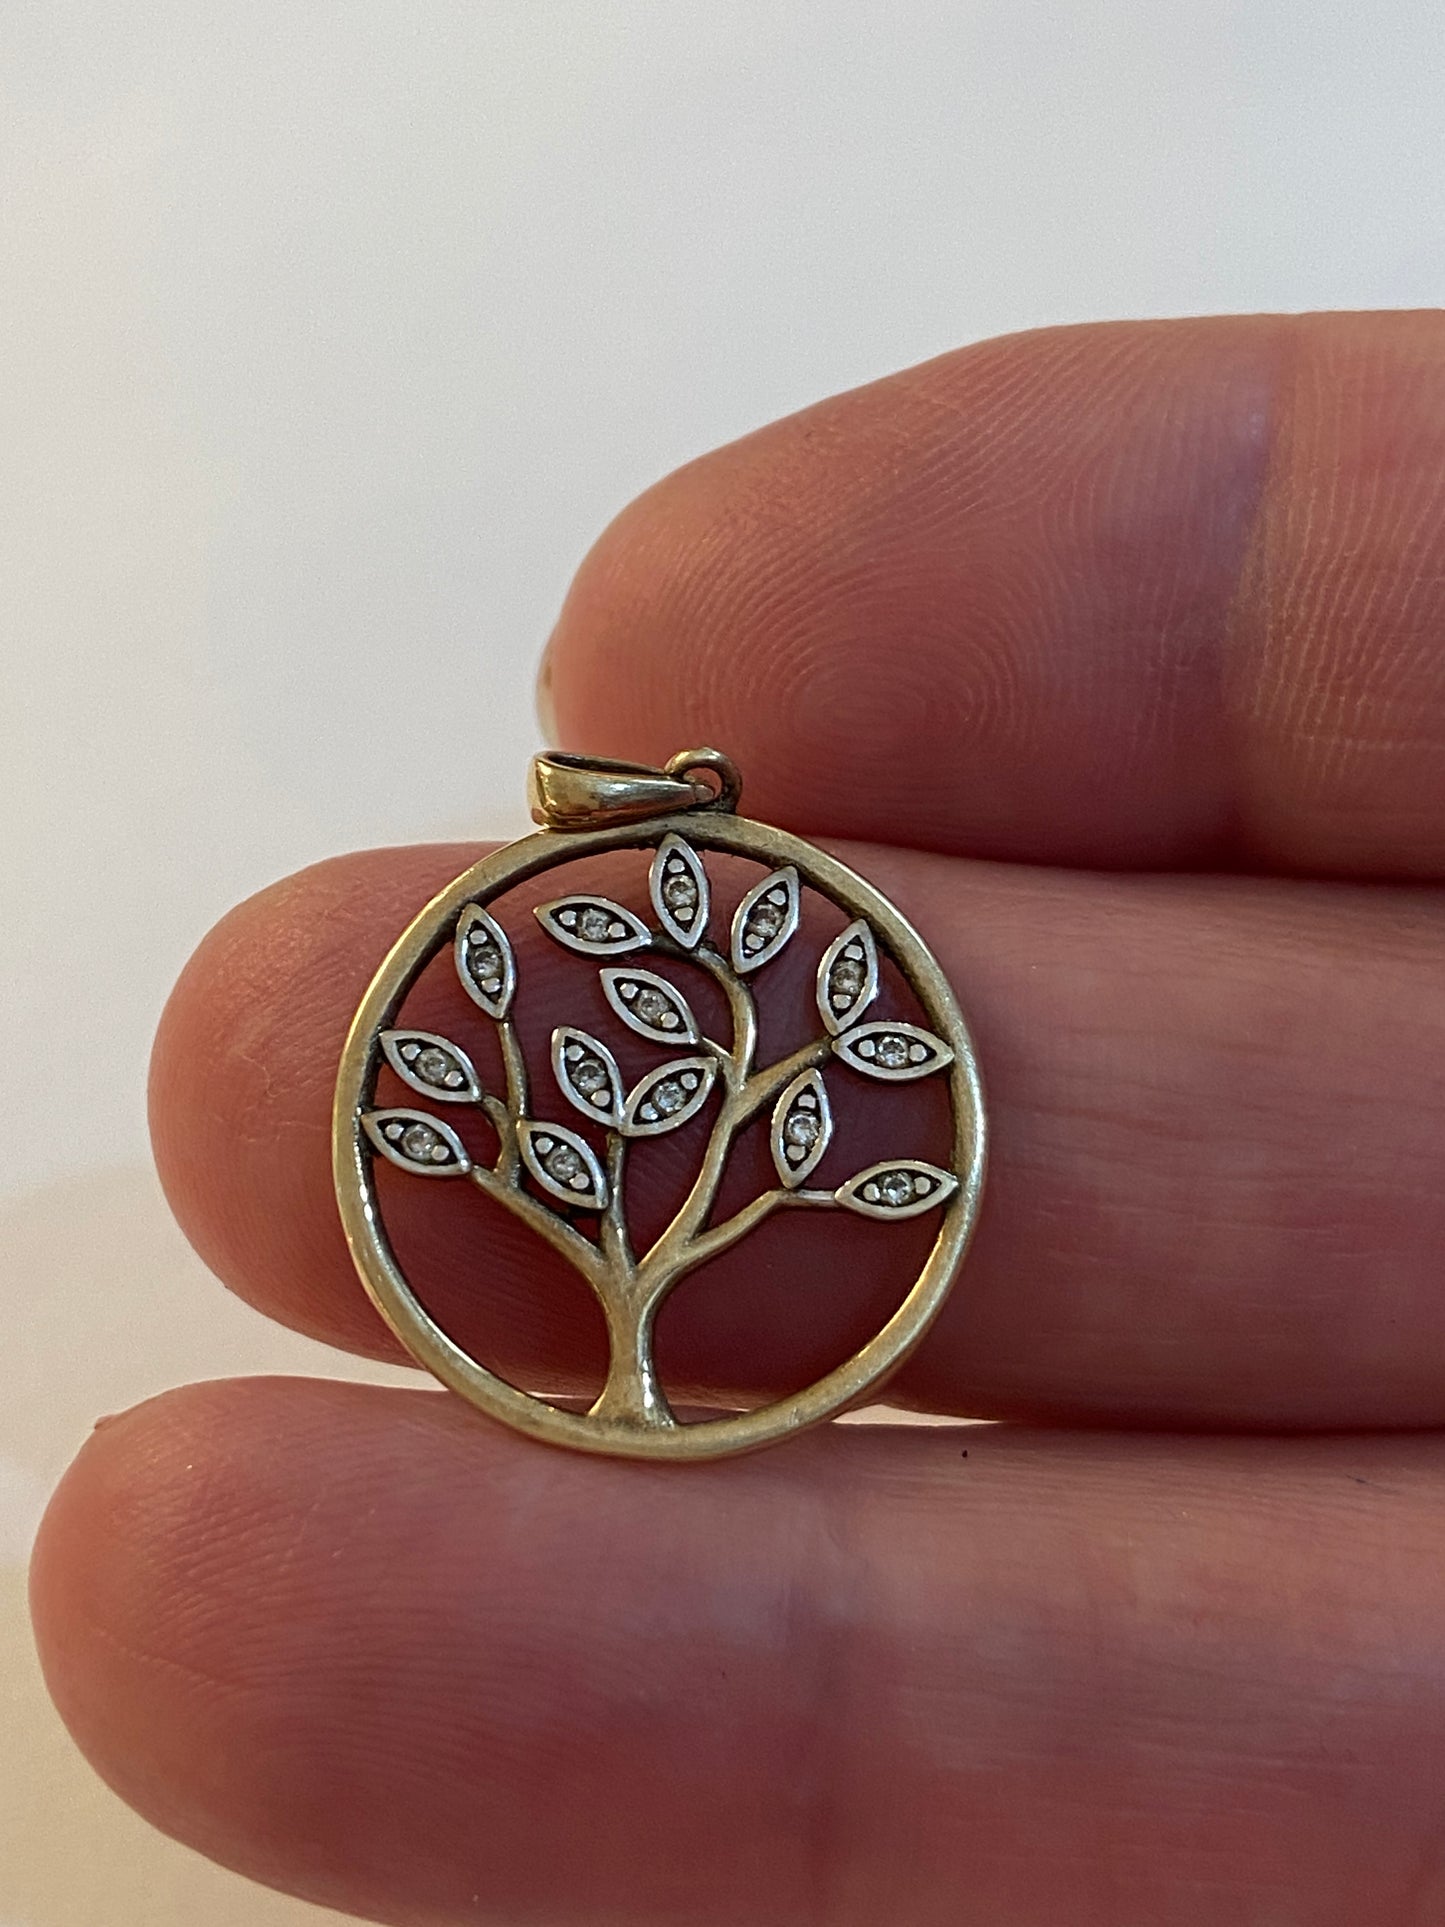 9ct tree of life pendant / charm with stones